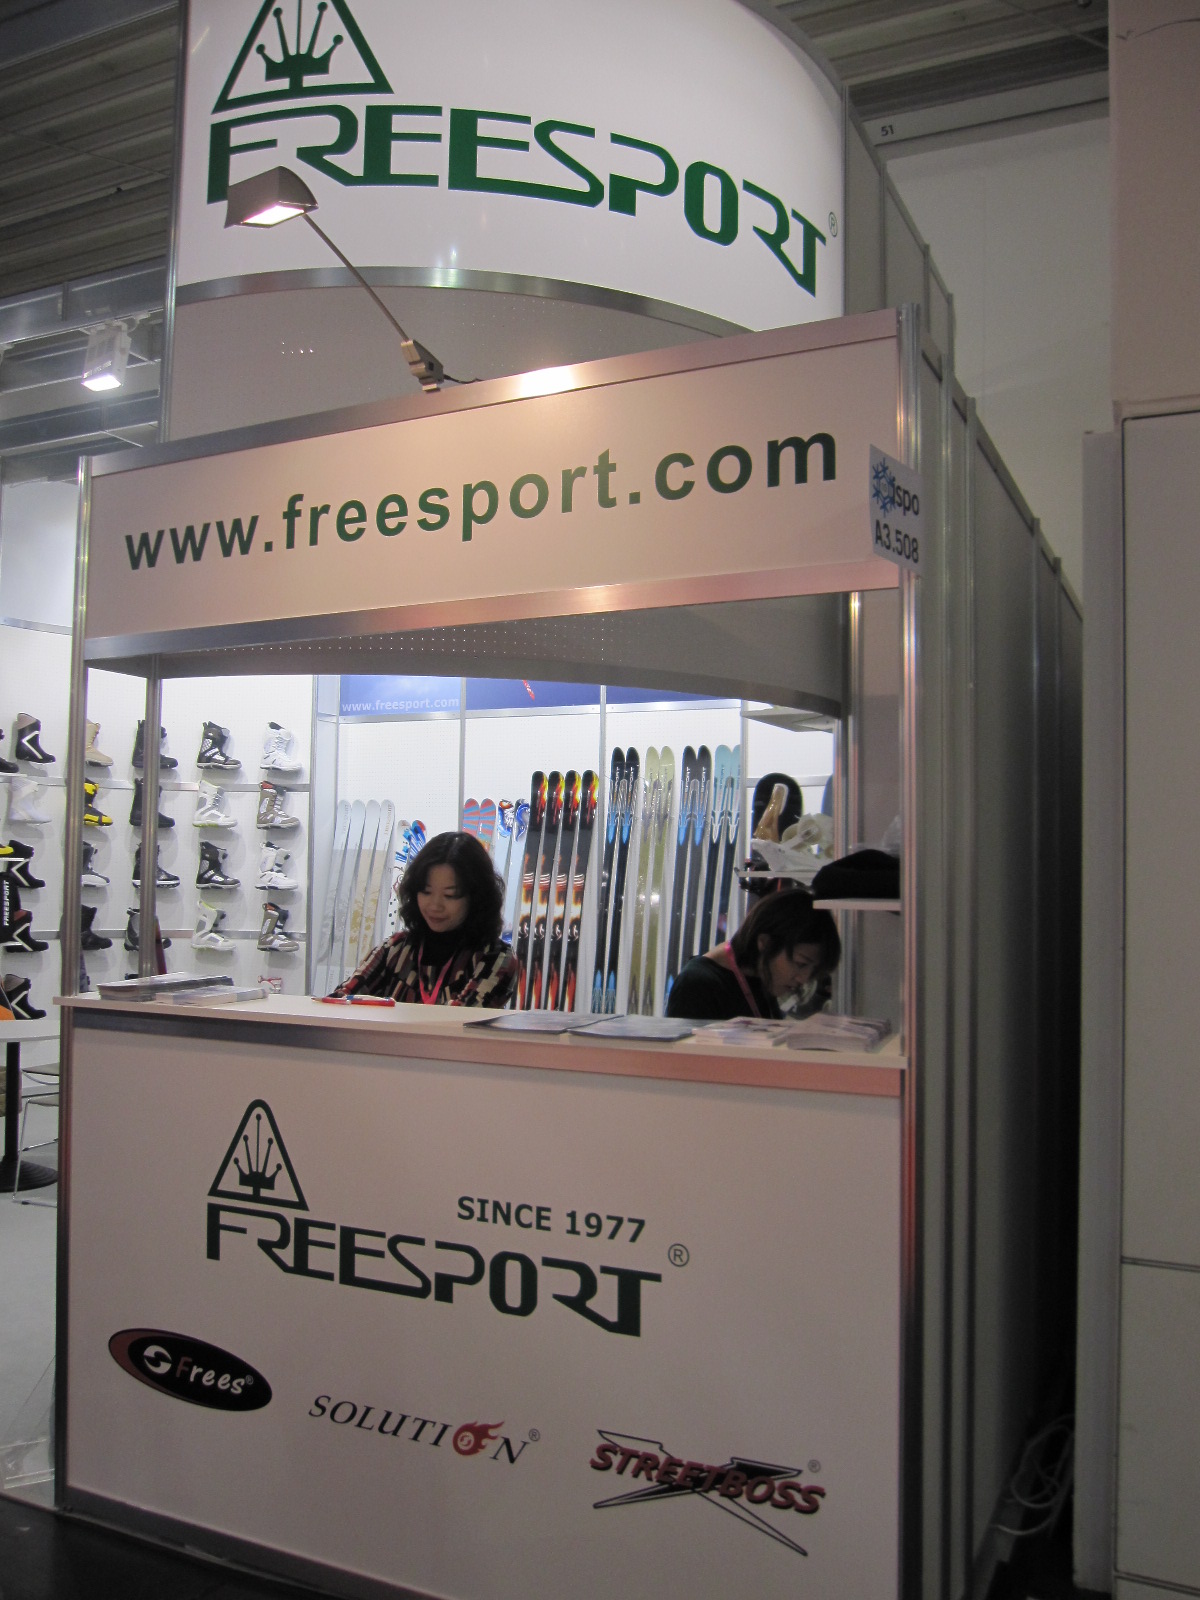 Freesport is a manufacturer of golf bags.